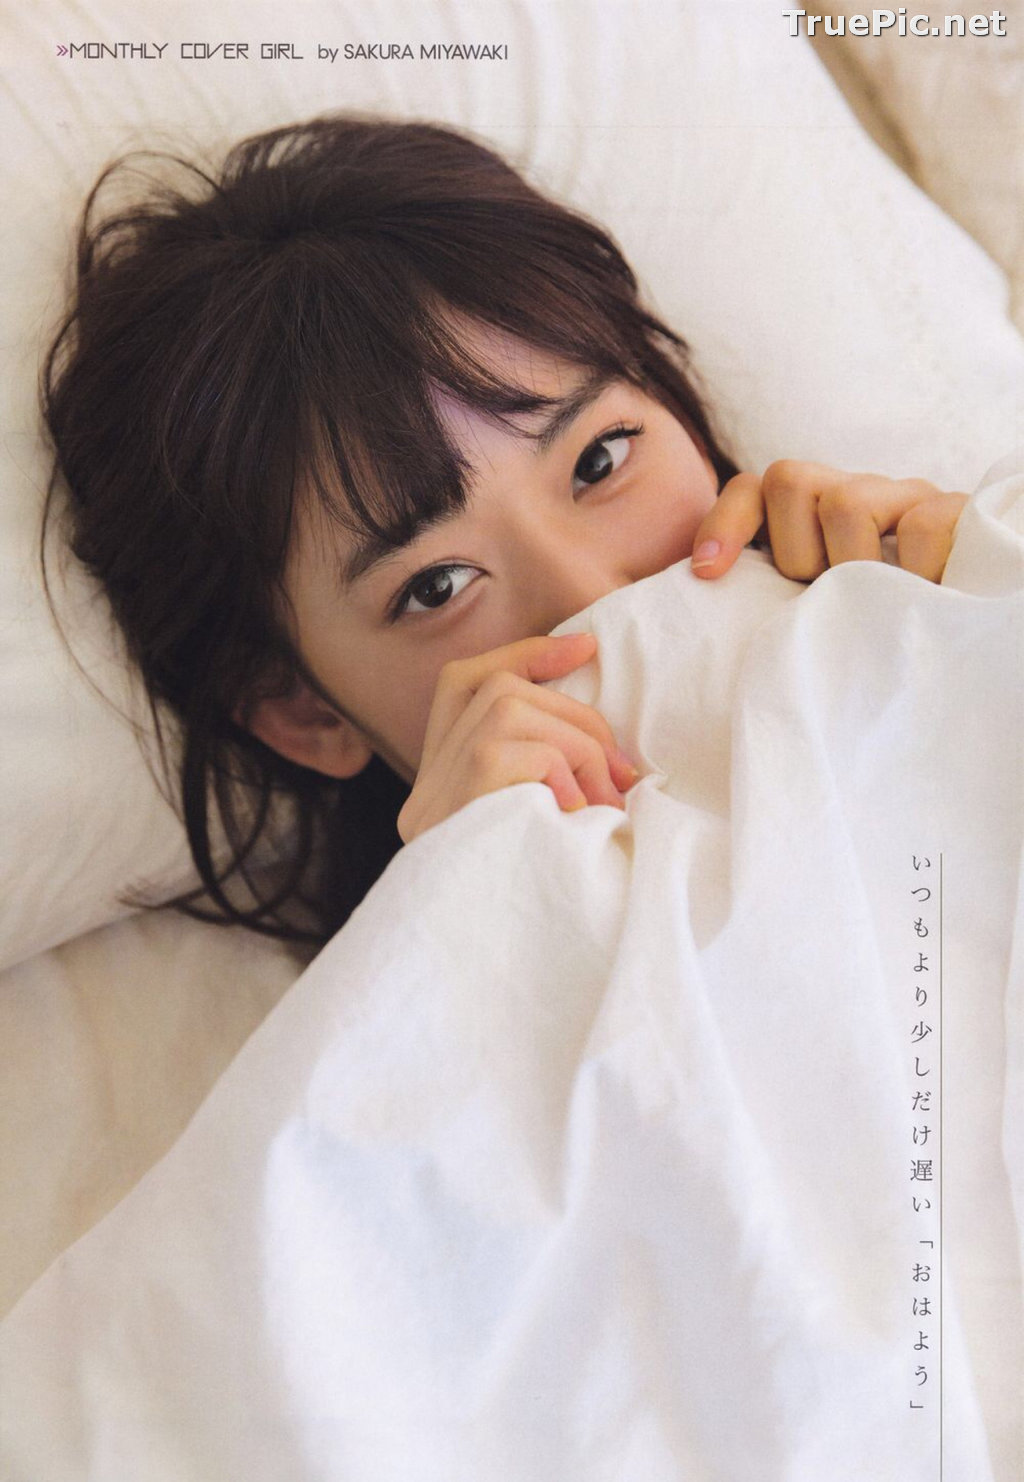 Image Japanese Singer and Actress - Sakura Miyawaki (宮脇咲良) - Sexy Picture Collection 2021 - TruePic.net - Picture-63